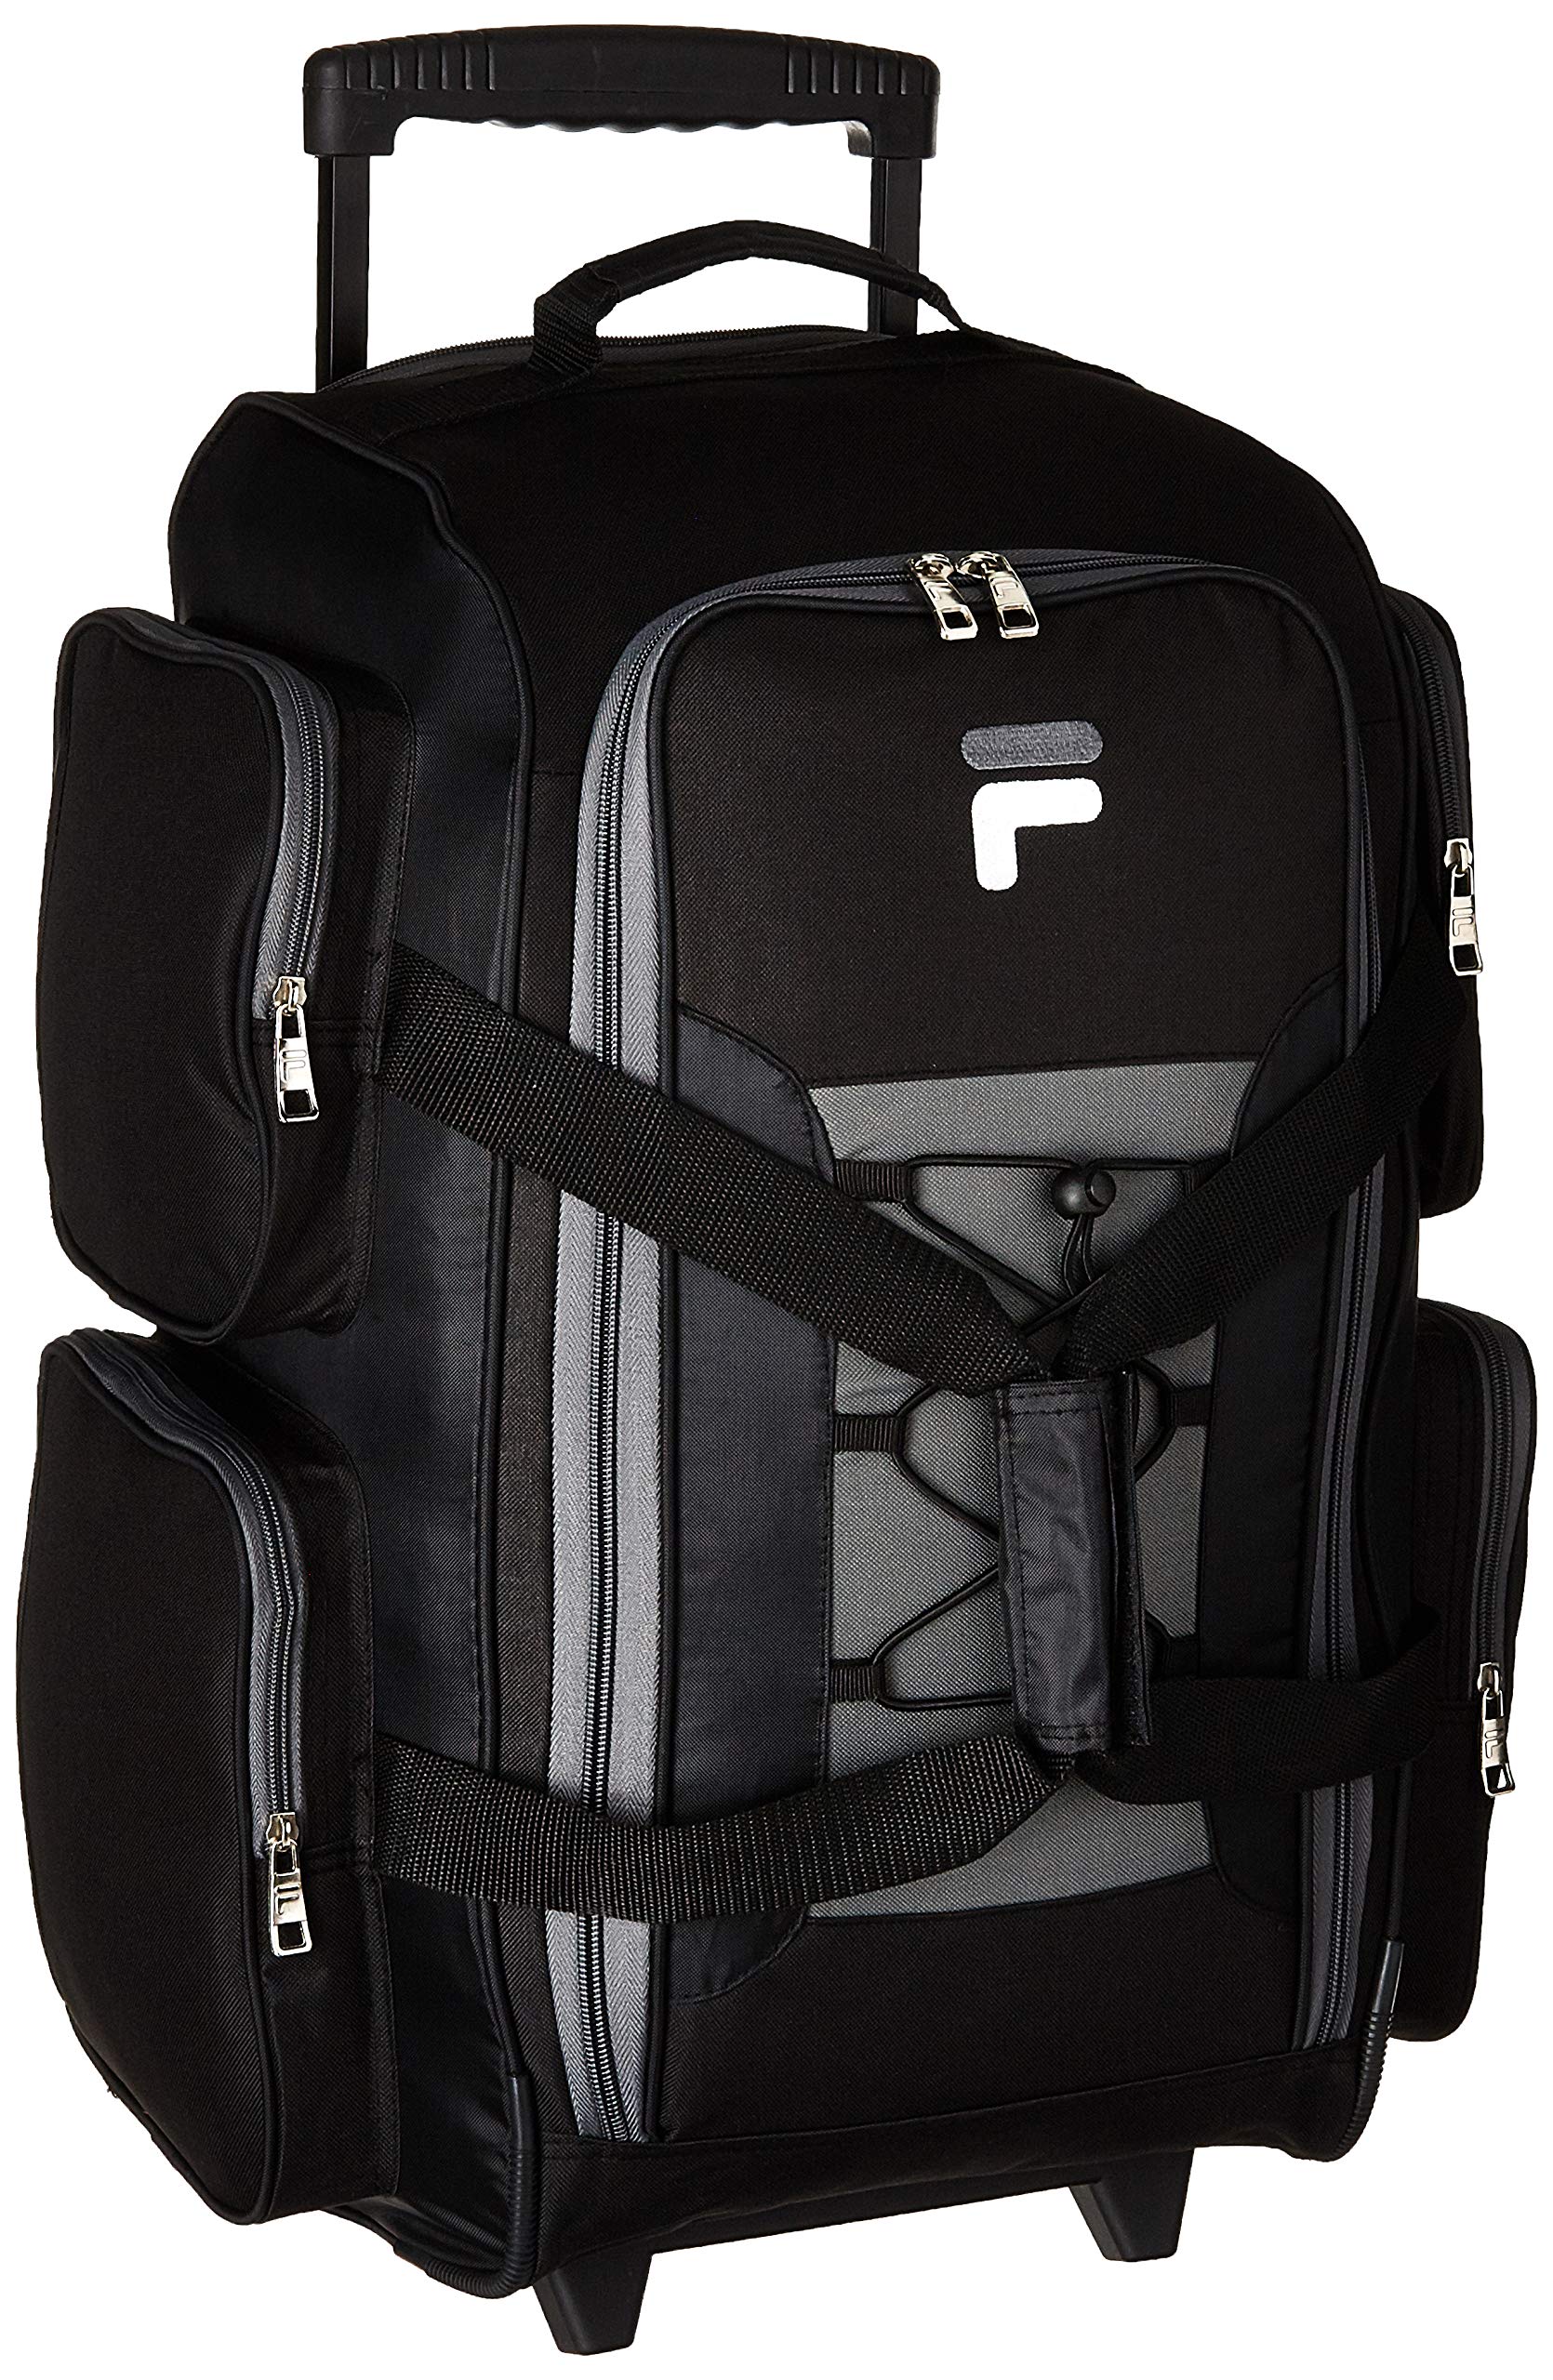 Fila 22" Lightweight Carry Rolling Duffel Bag, Black, One Size– backpacks4less.com